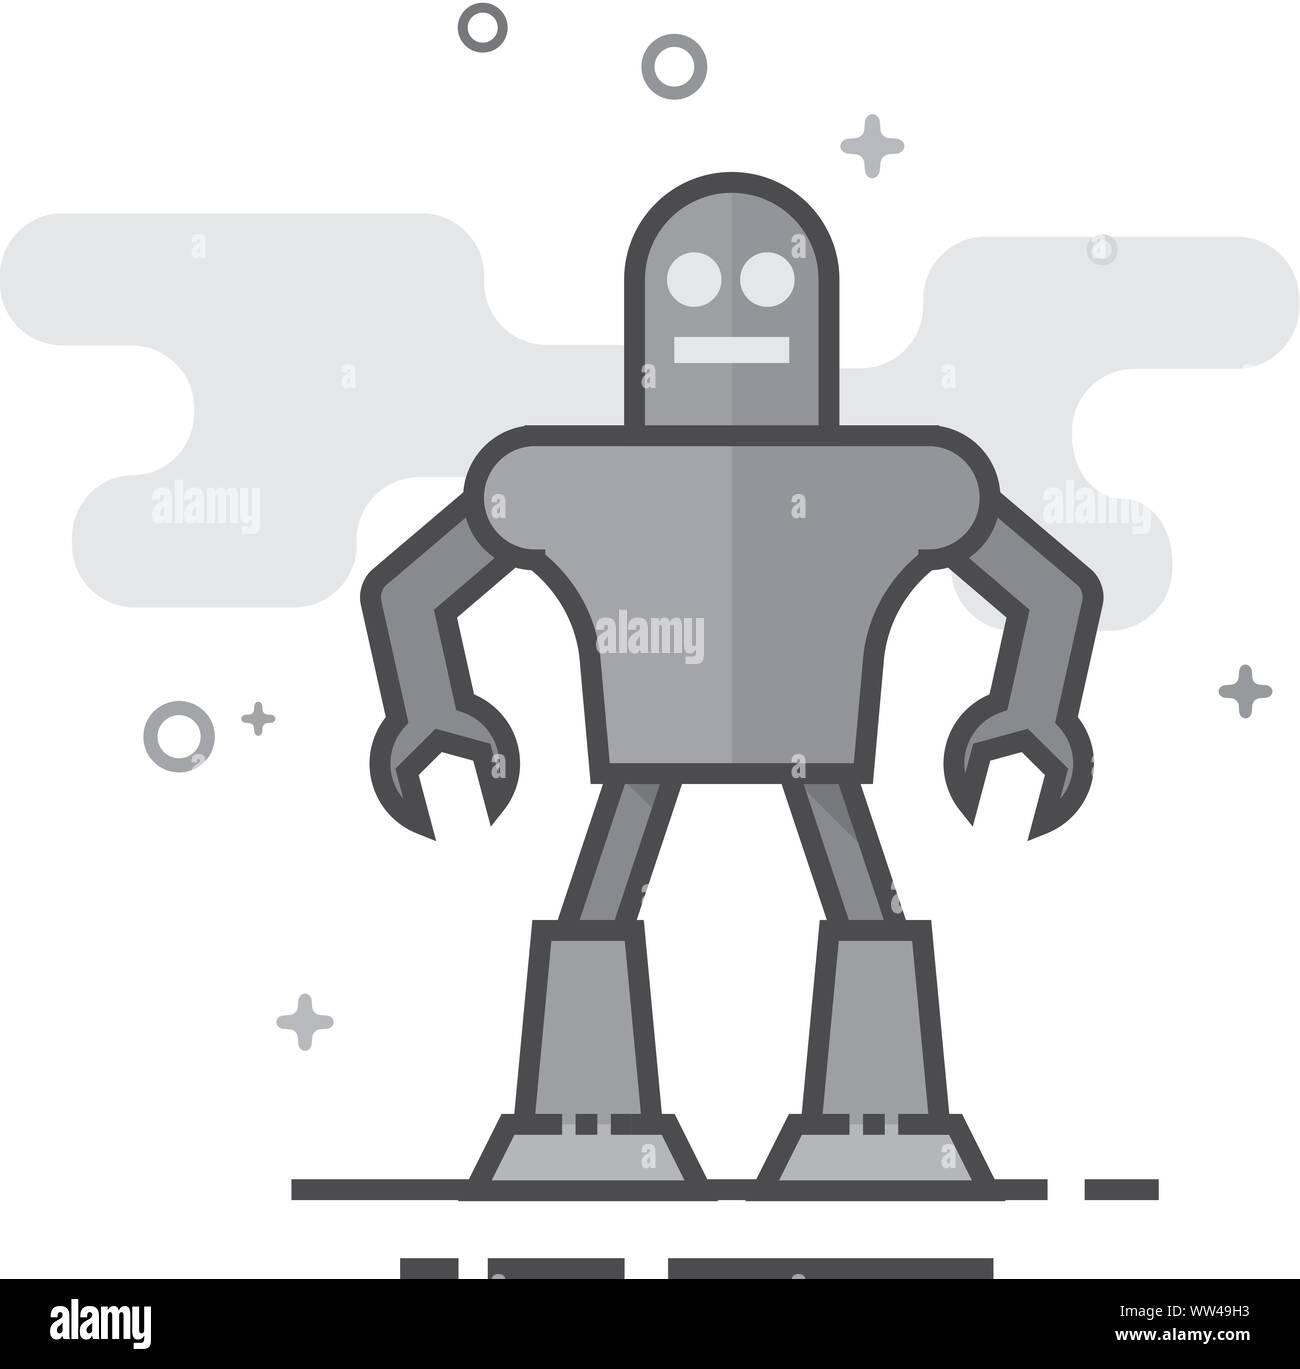 Spielzeug Roboter Symbol in flachen Umrissen Graustufen Stil. Vector Illustration. Stock Vektor